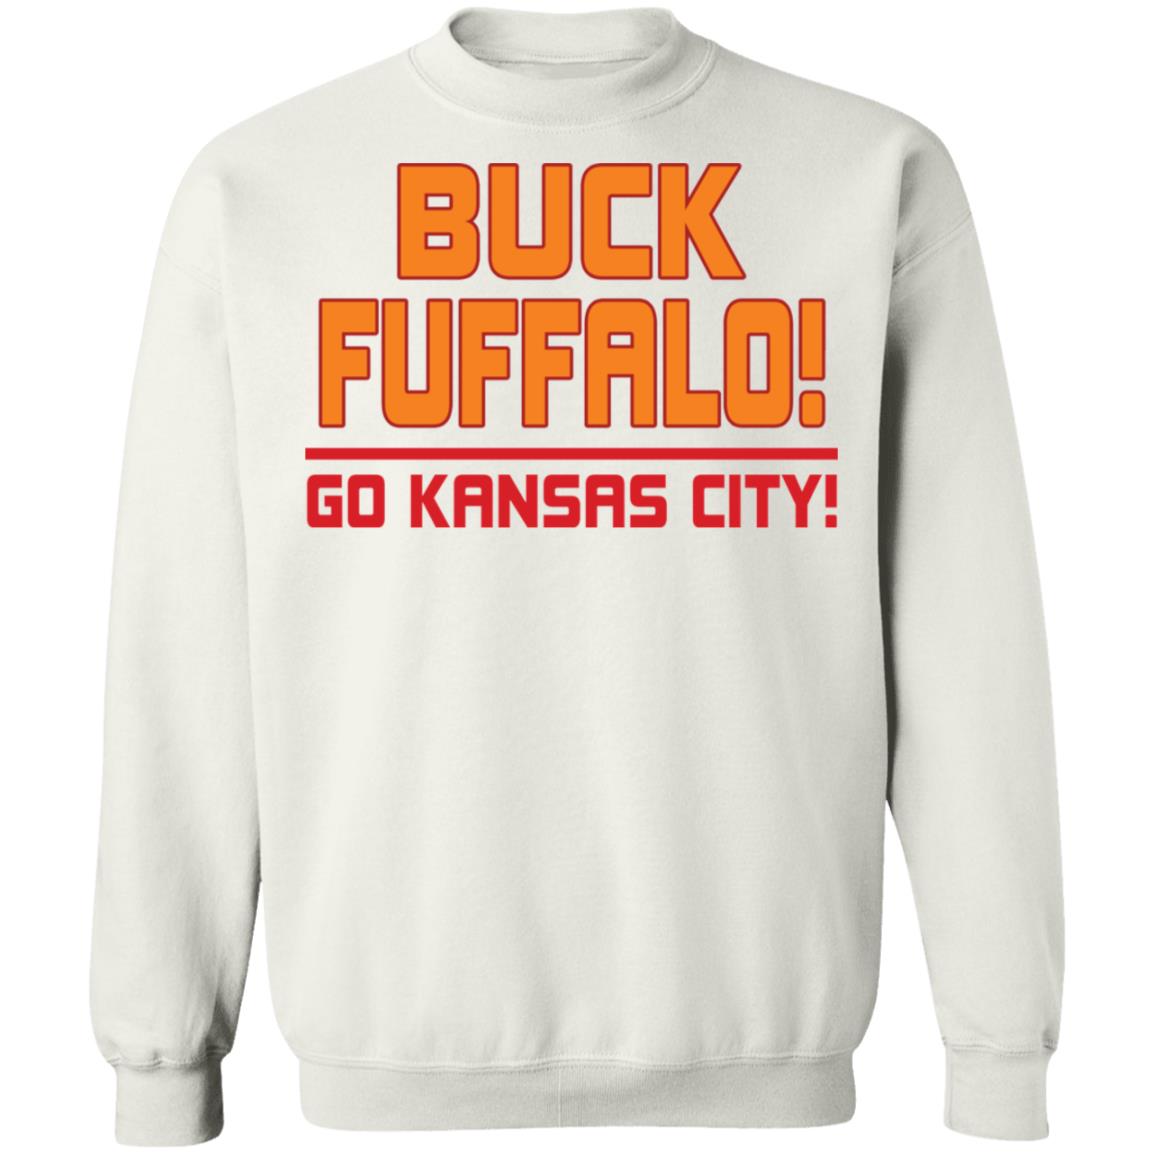 Buck Fuffalo Go Kansas City Shirt 1